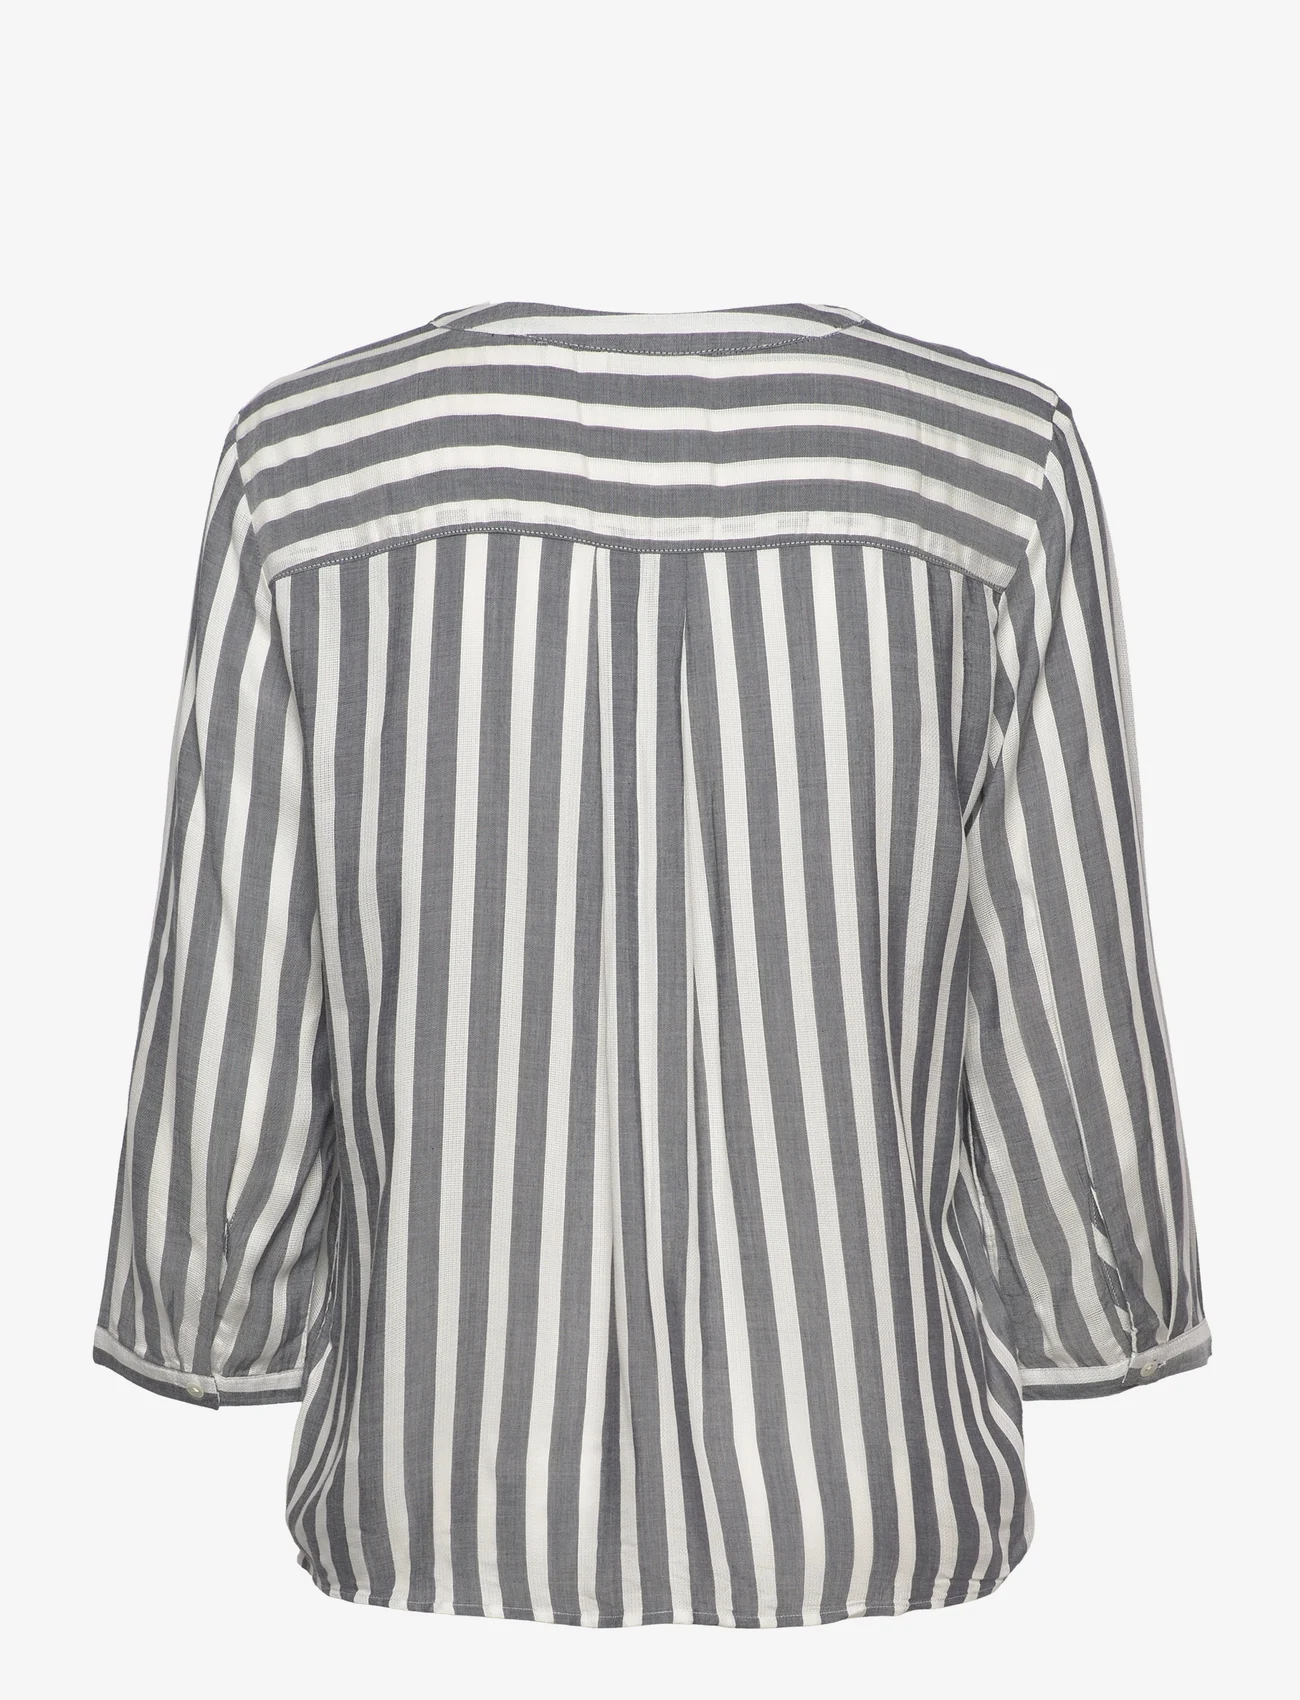 Tom Tailor - blouse striped - long-sleeved blouses - offwhite navy vertical stripe - 1